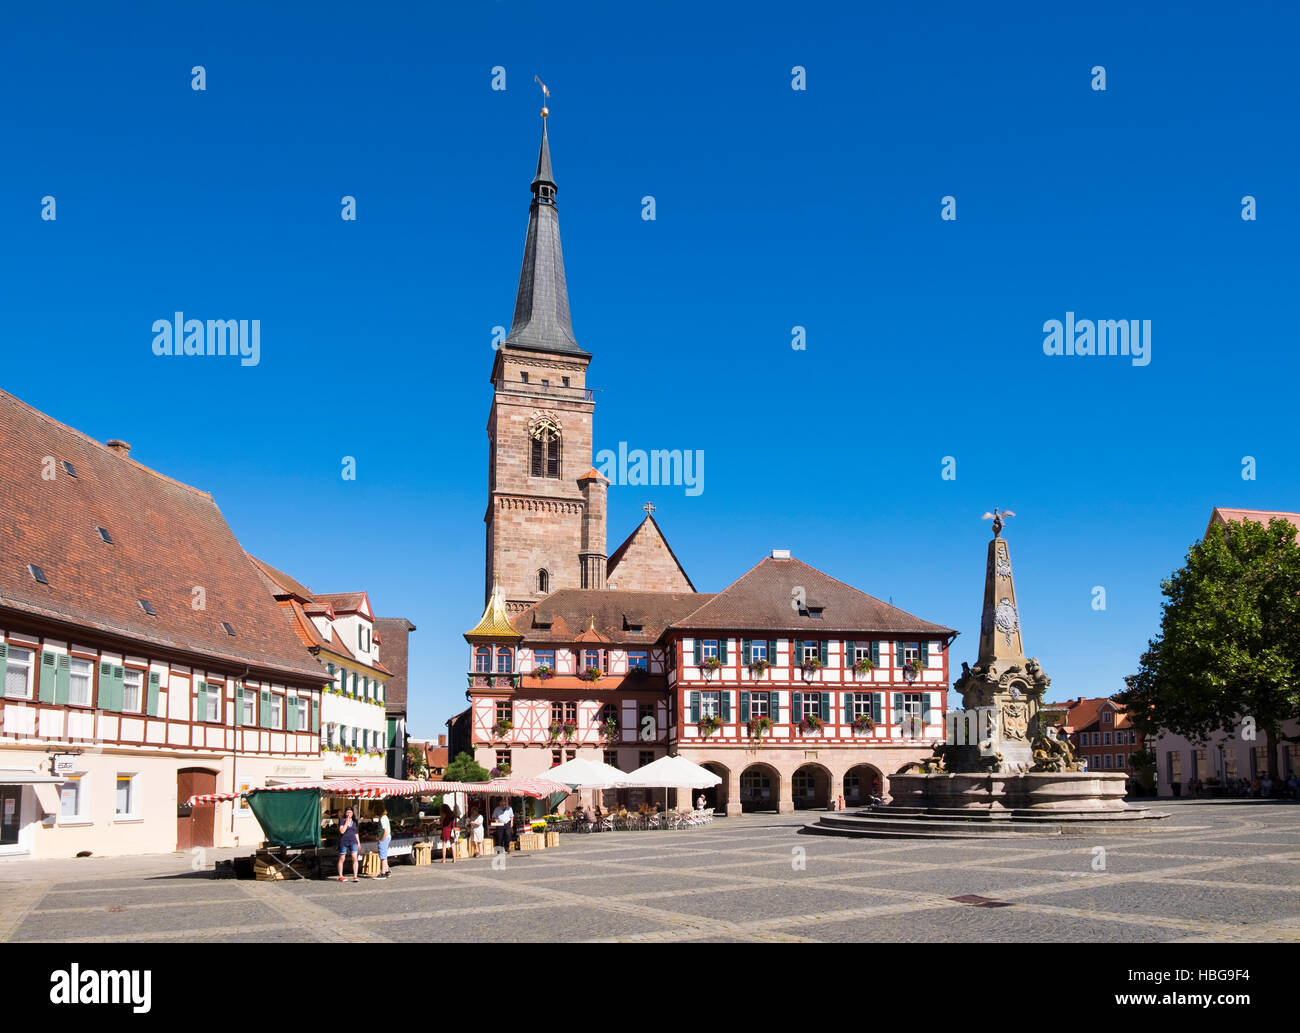 Schöner Brunnen, fountain, town hall and church, Königsplatz, Schwabach, Middle Franconia, Franconia, Bavaria, Germany Stock Photo